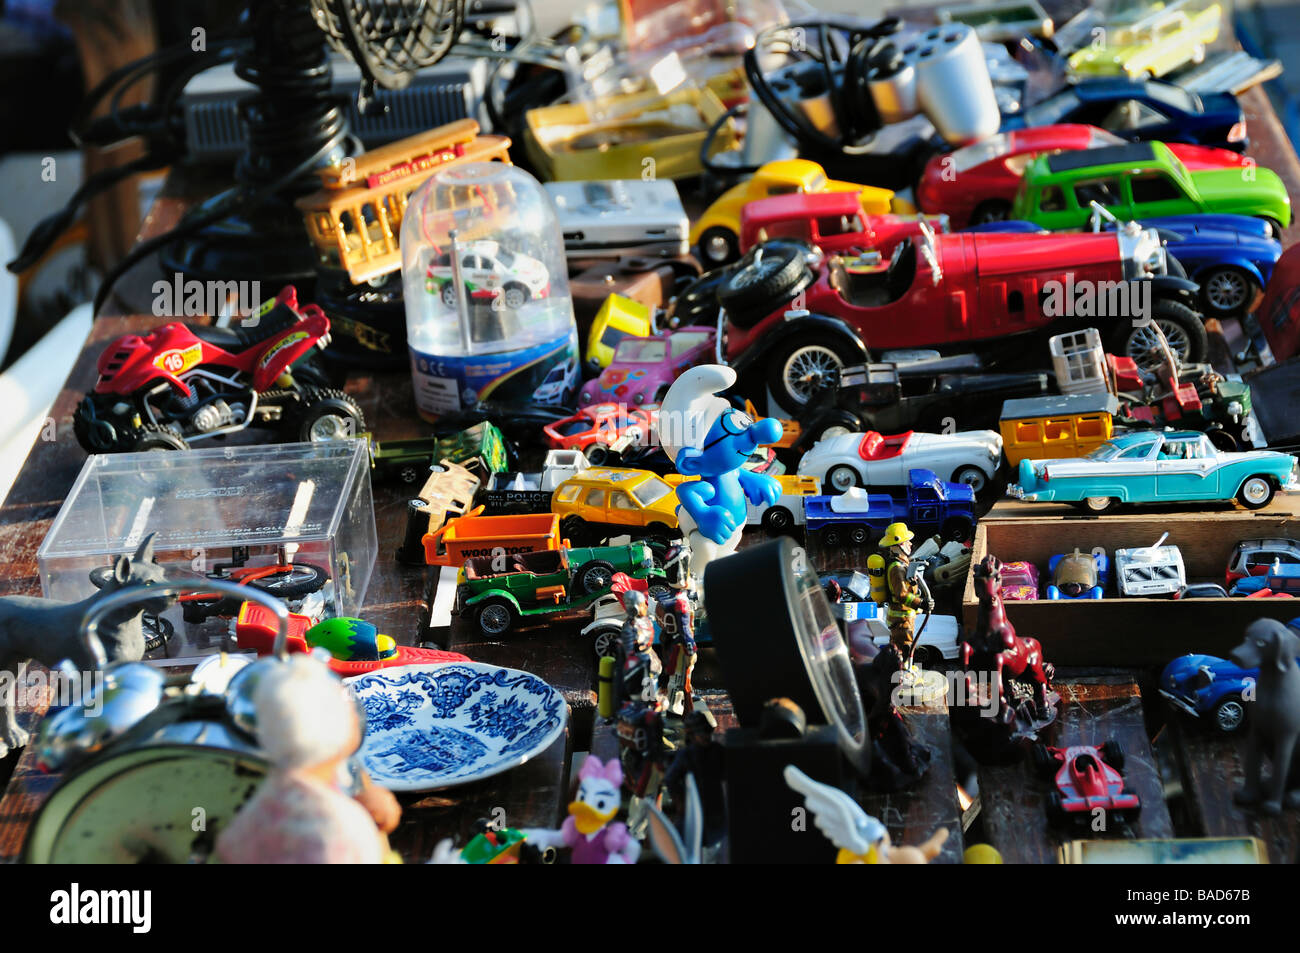 Paris France, Cars, Toys, Shopping, Outside Public Flea Market Stock Photo: 23647215 - Alamy